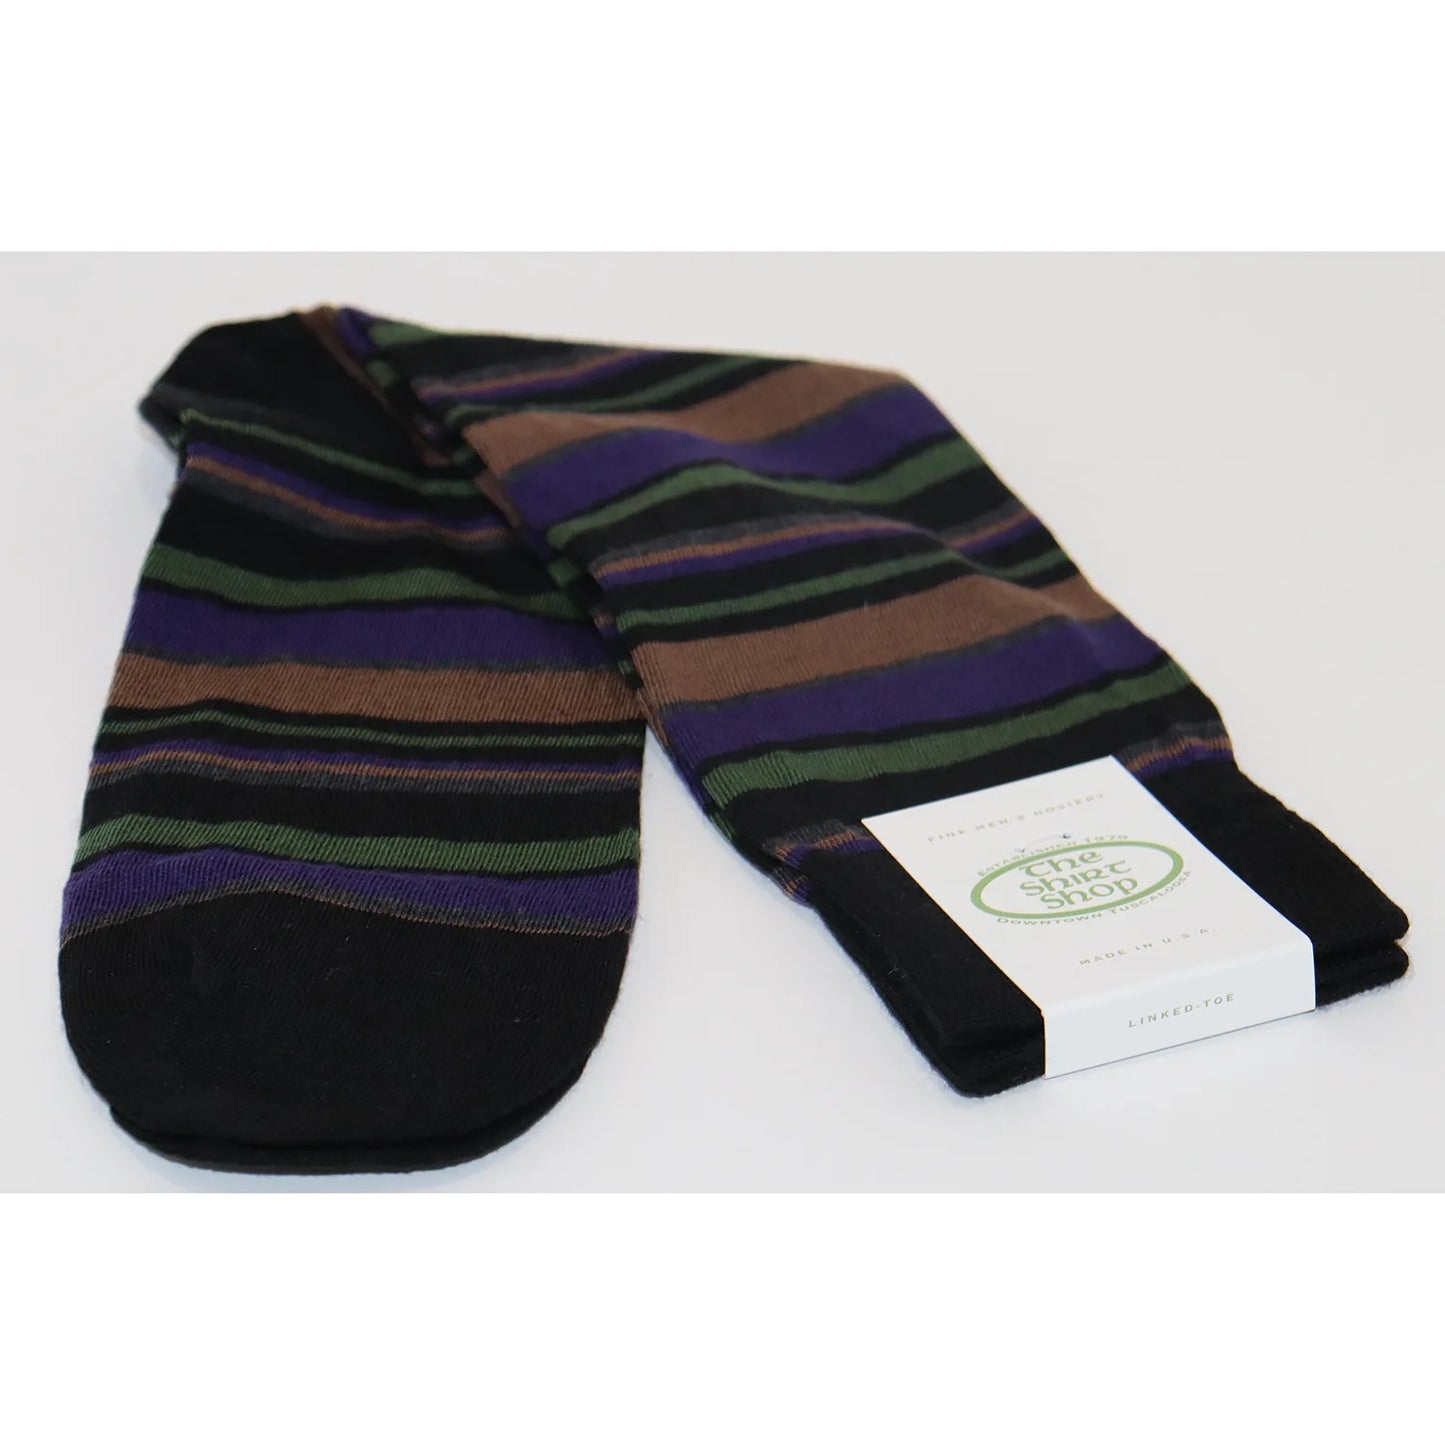 The Shirt Shop Dress Socks - Black/Green/Purple/Coffee Stripe